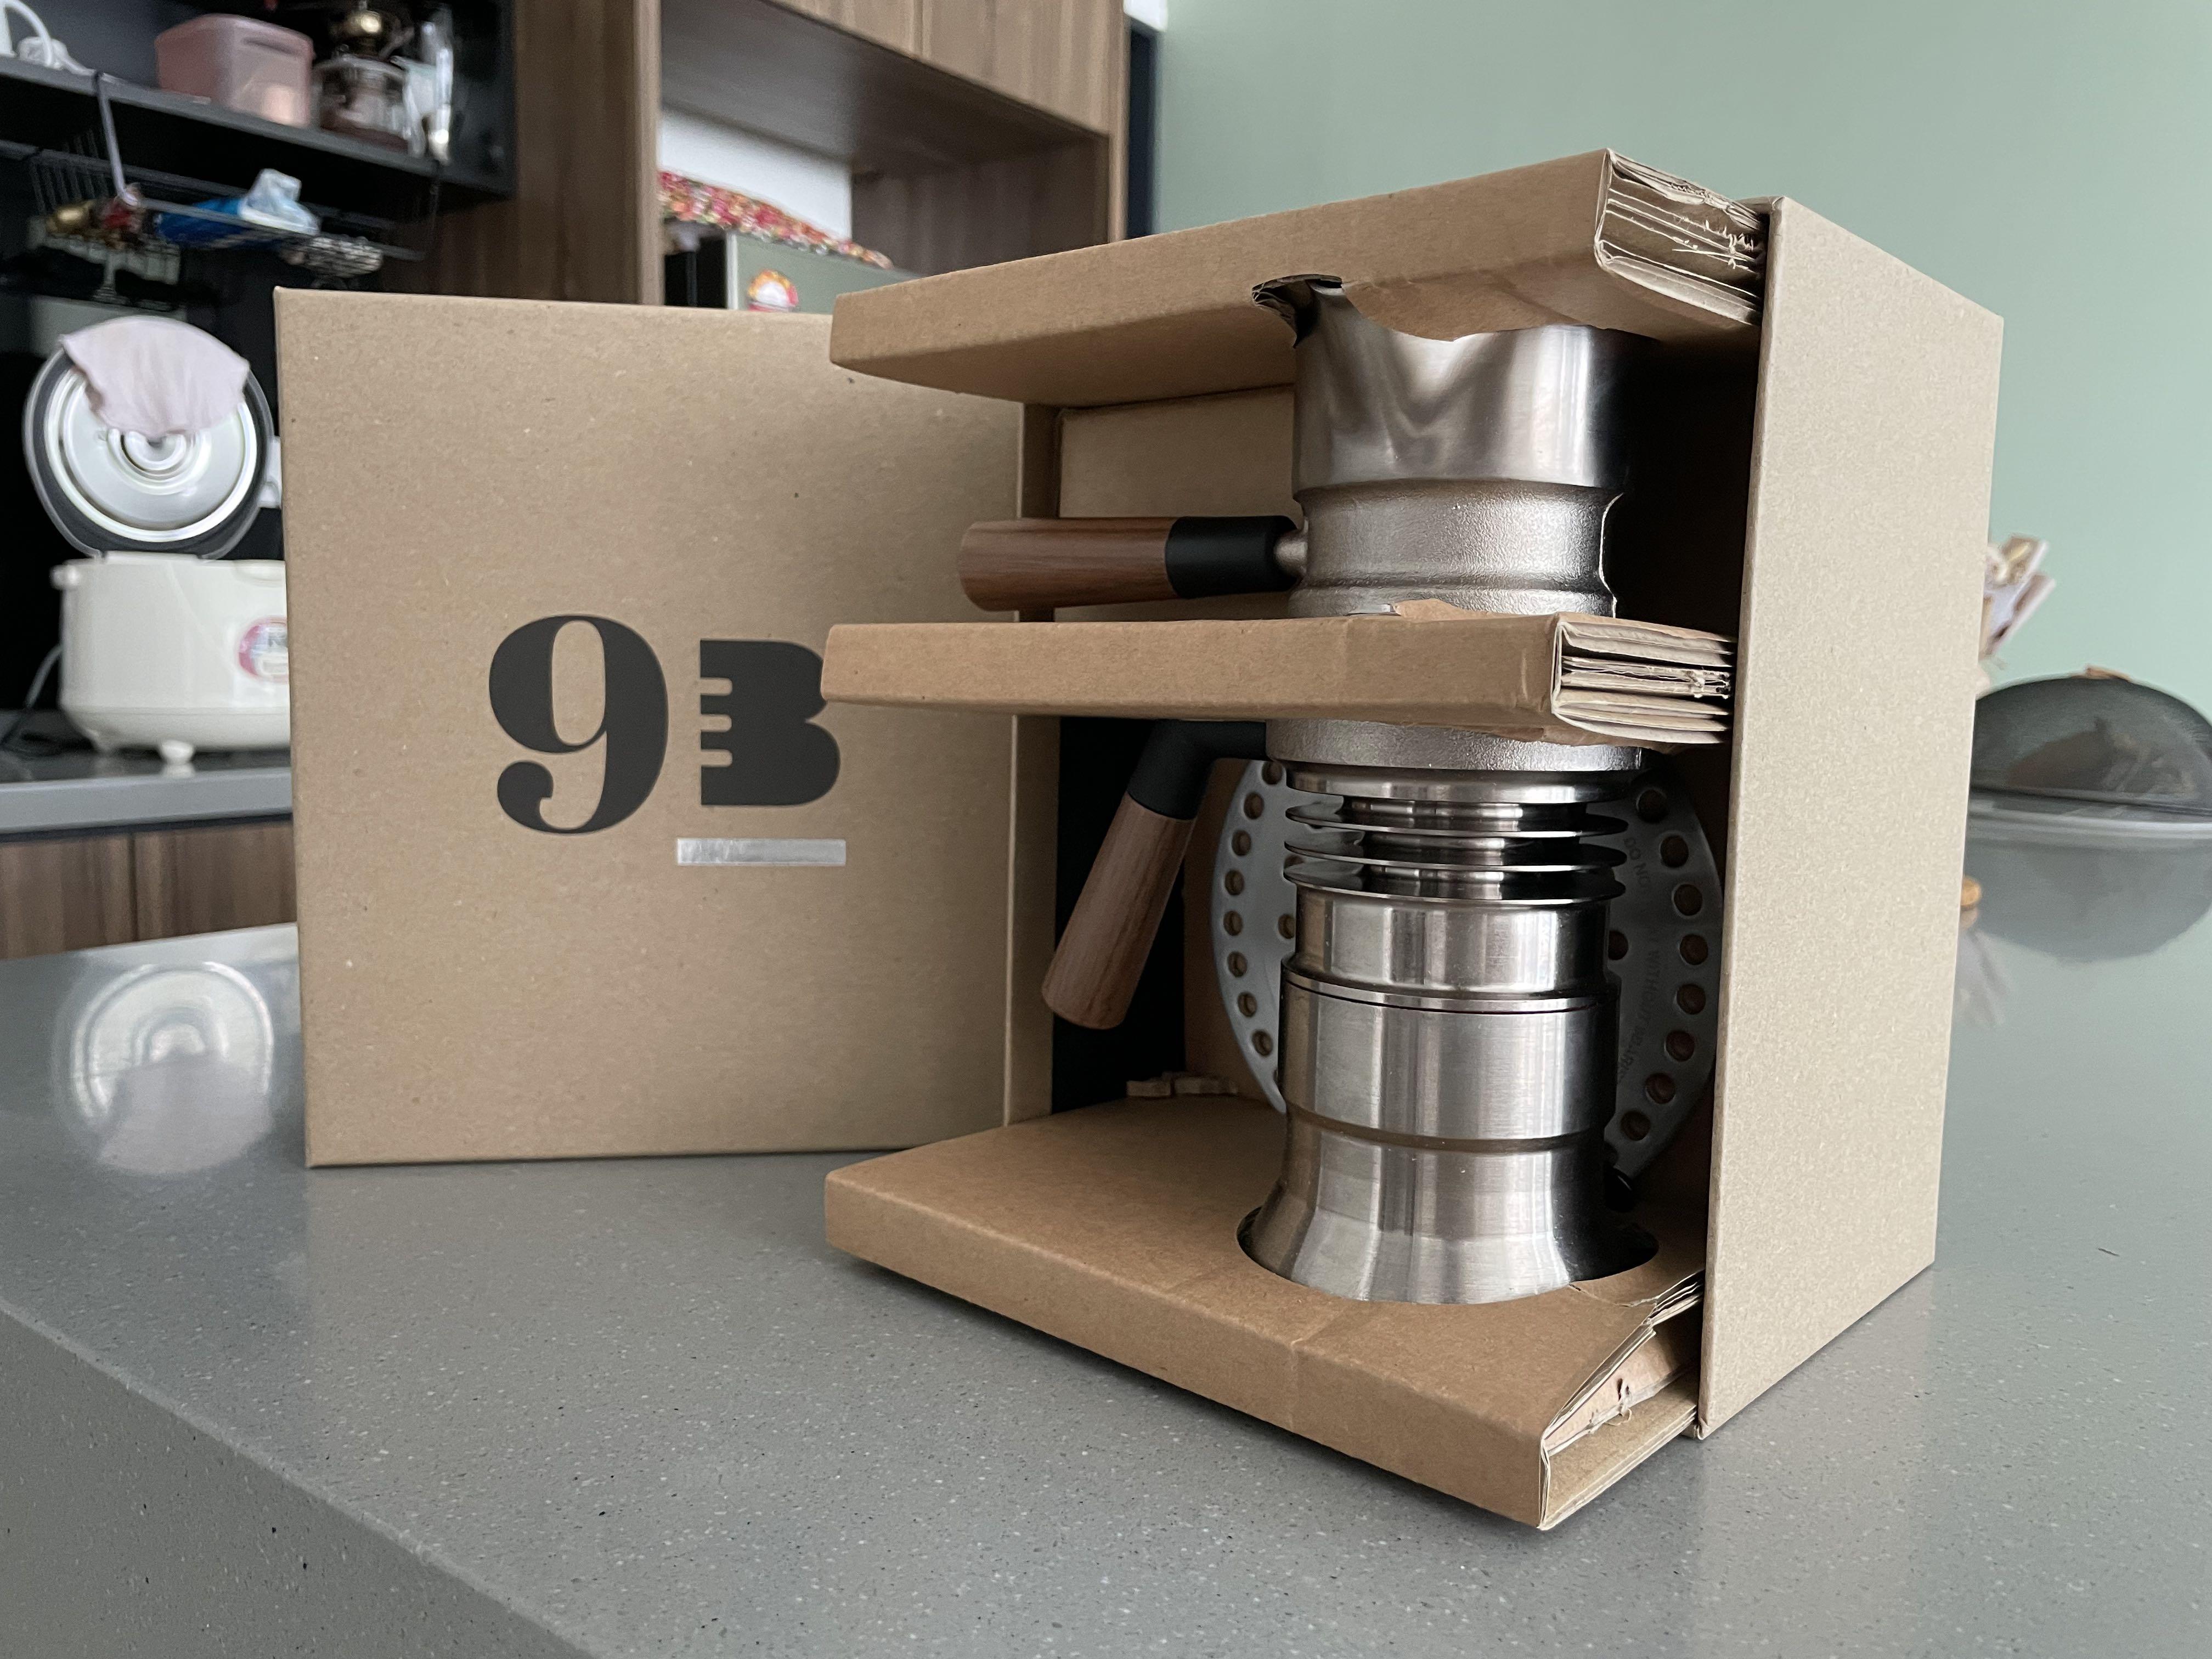 9barista Espresso Maker, TV & Home Appliances, Kitchen Appliances